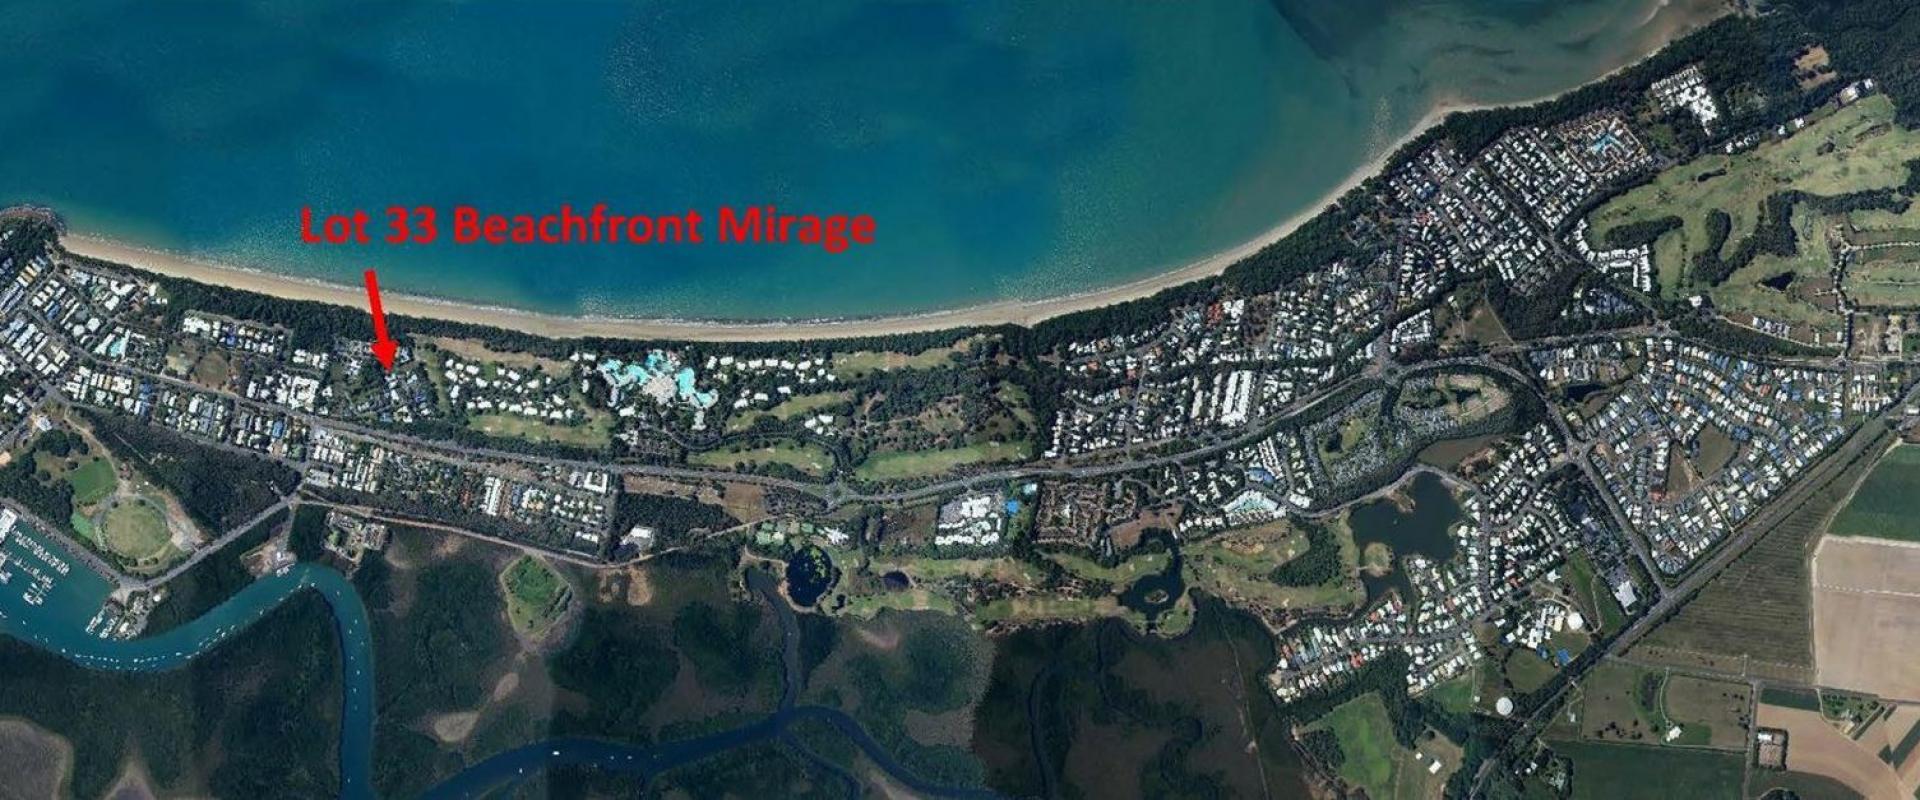 33 Beachfront Mirage, Port Douglas SOLD by Tony McGrath Port Douglas